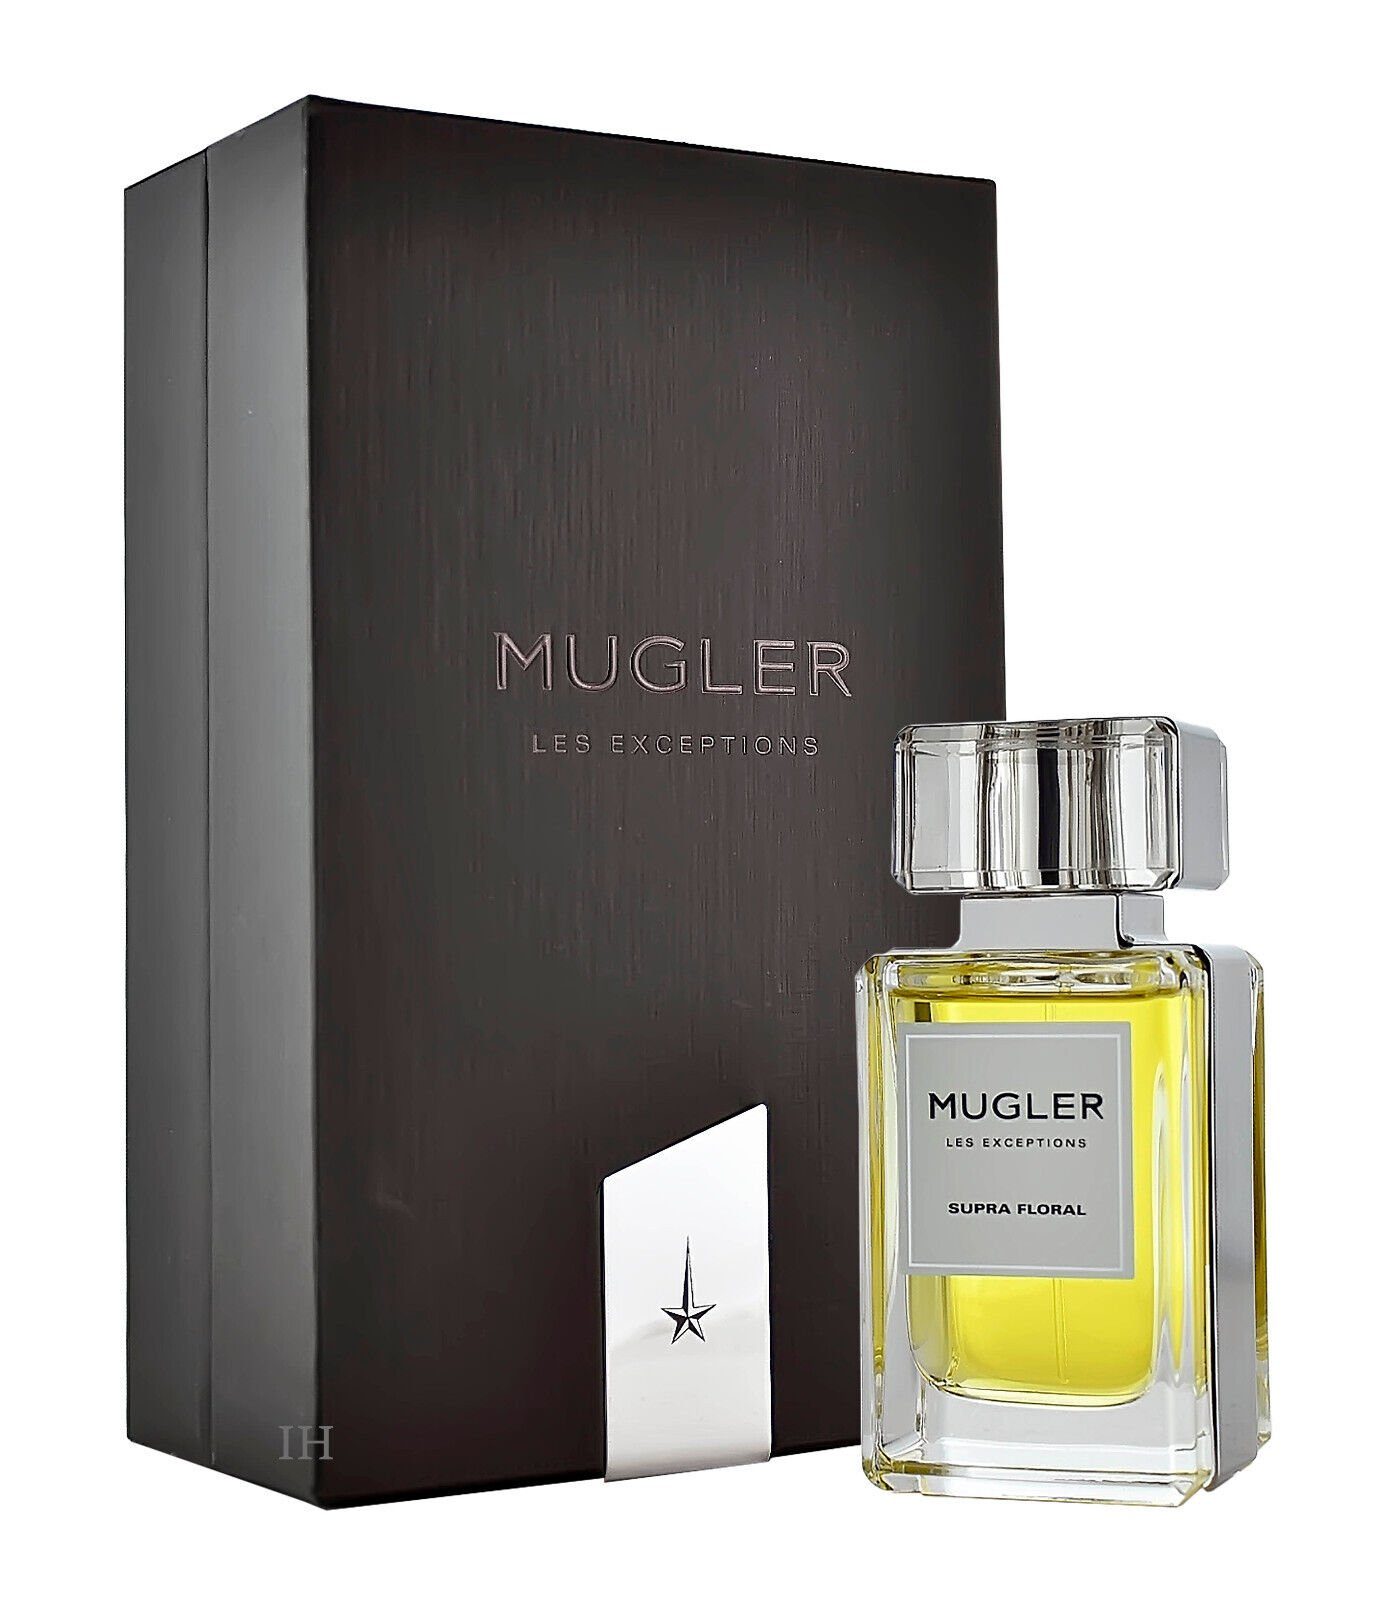 Exceptions EDP Eau Mugler Parfum Les Mugler 80ml de Floral Supra